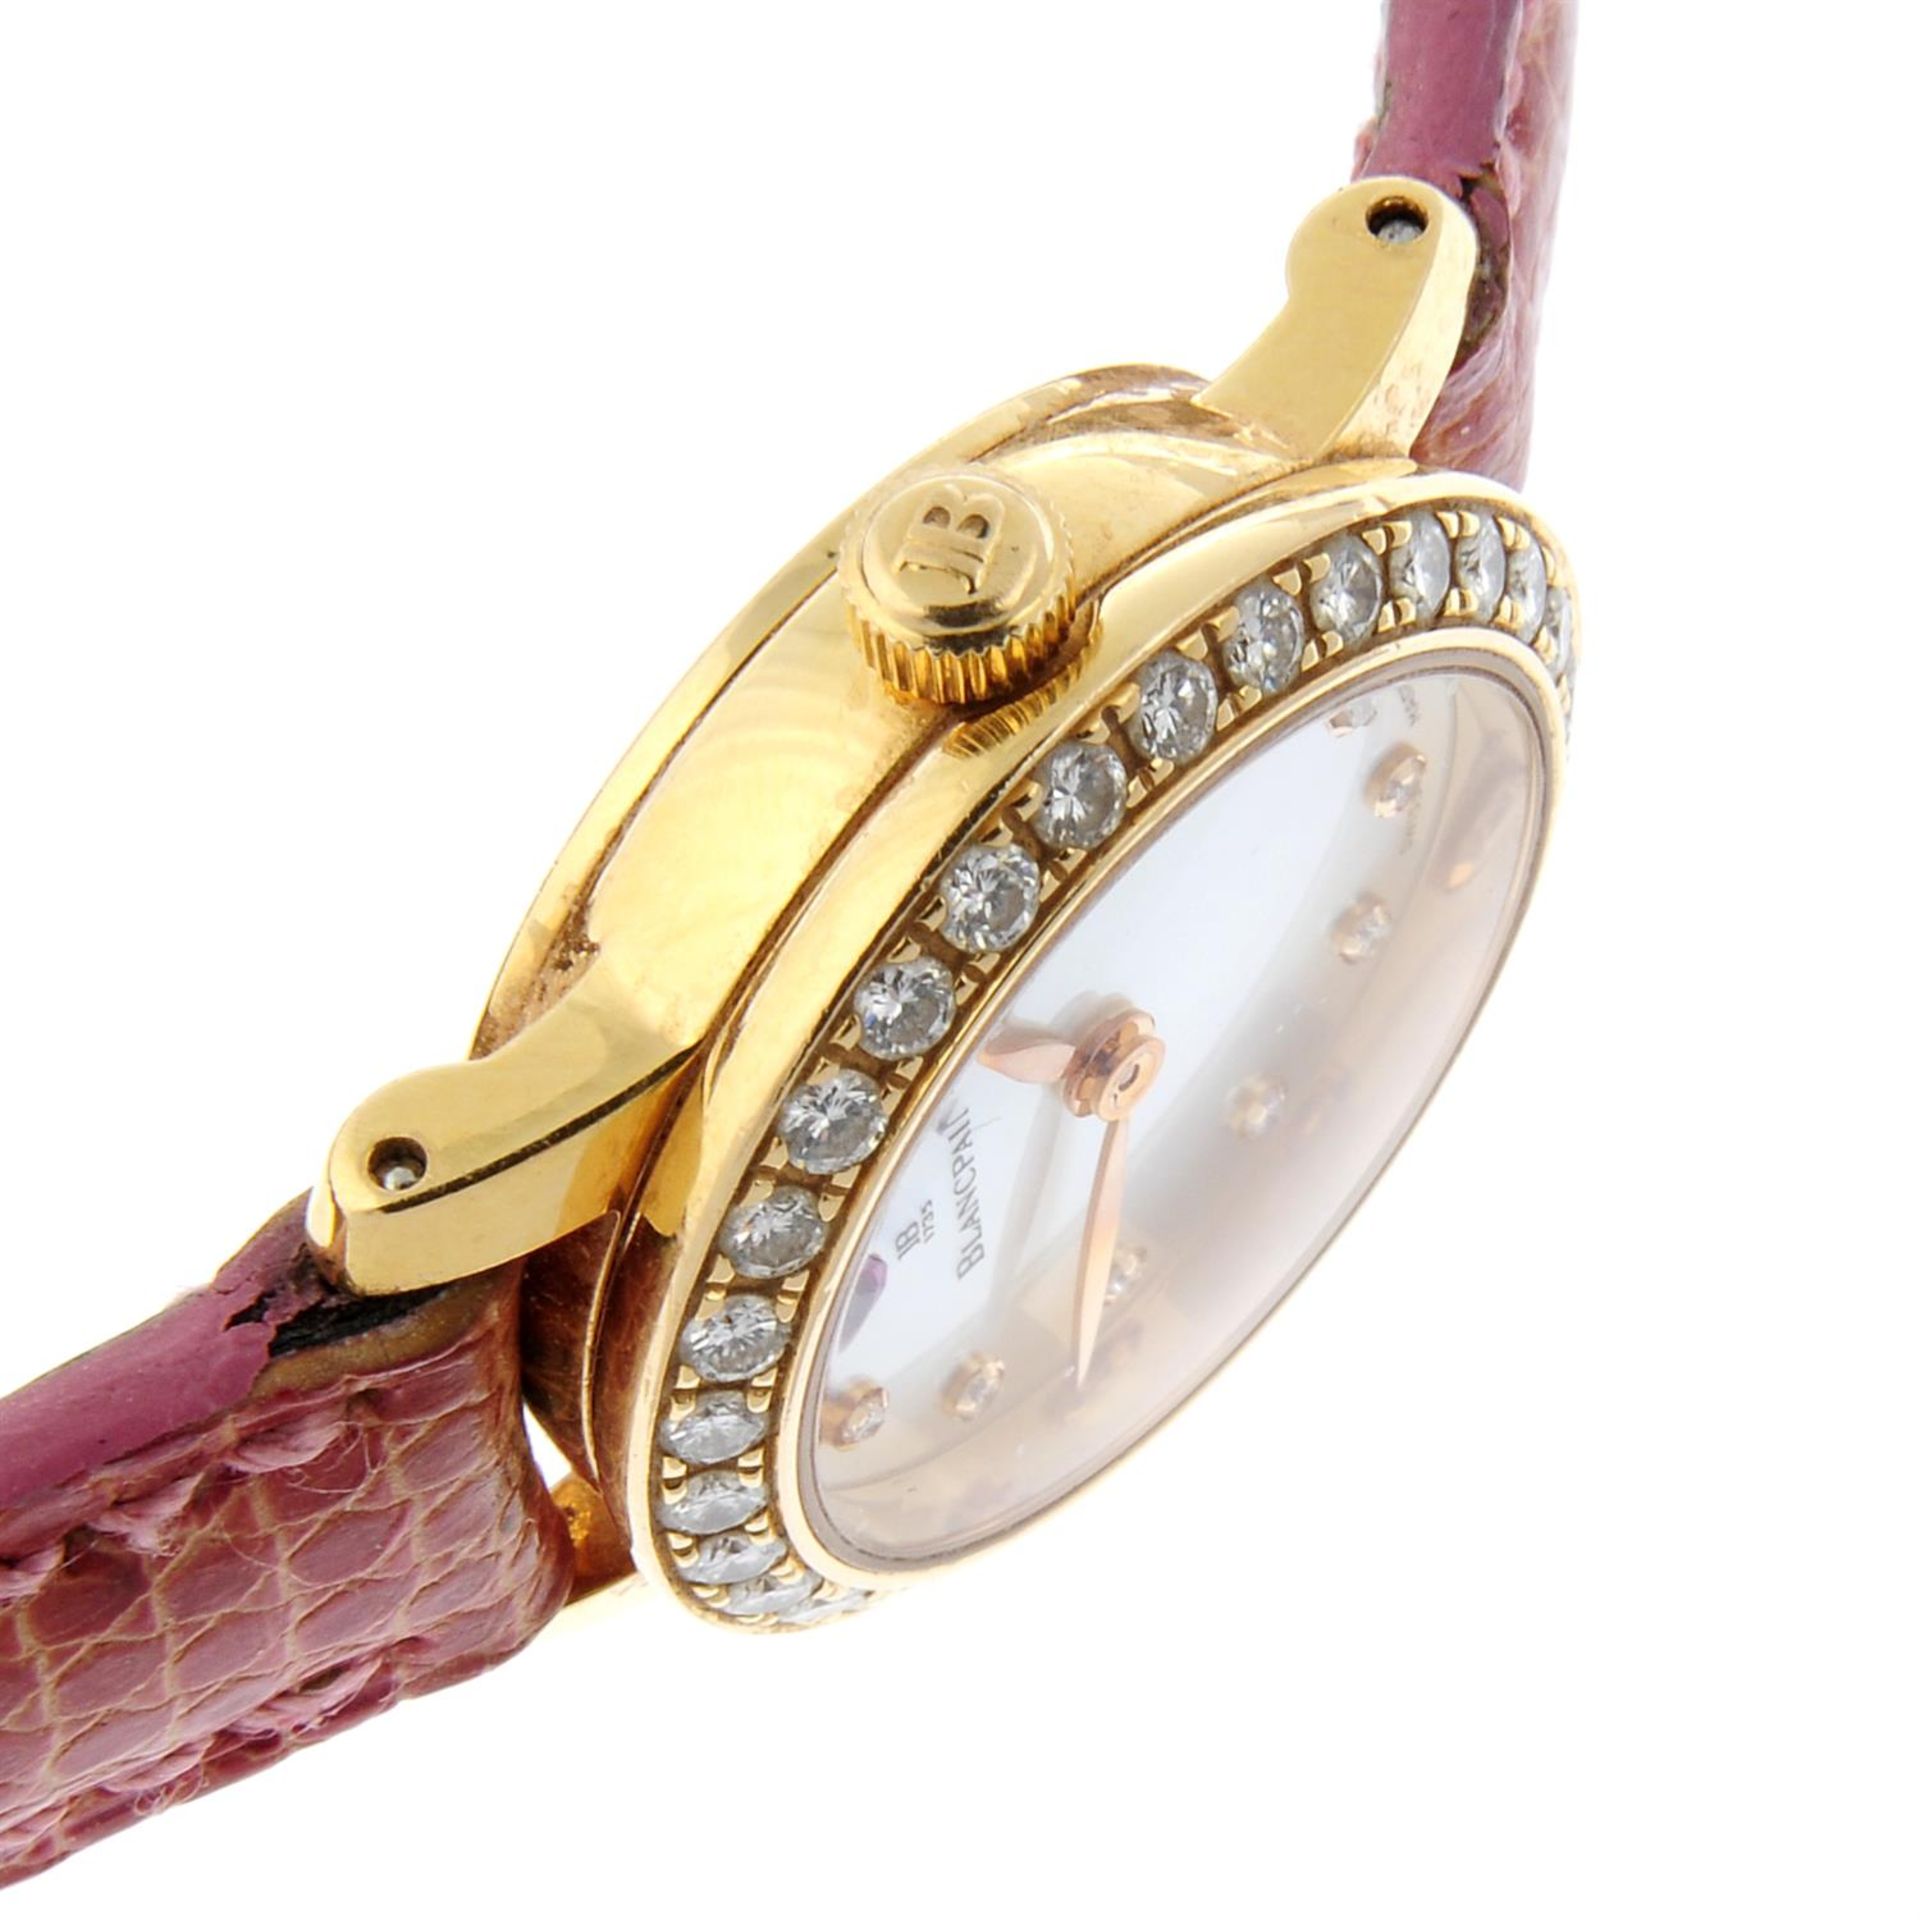 BLANCPAIN - an 18ct yellow gold Ladybird wrist watch, 21.5mm. - Image 3 of 6